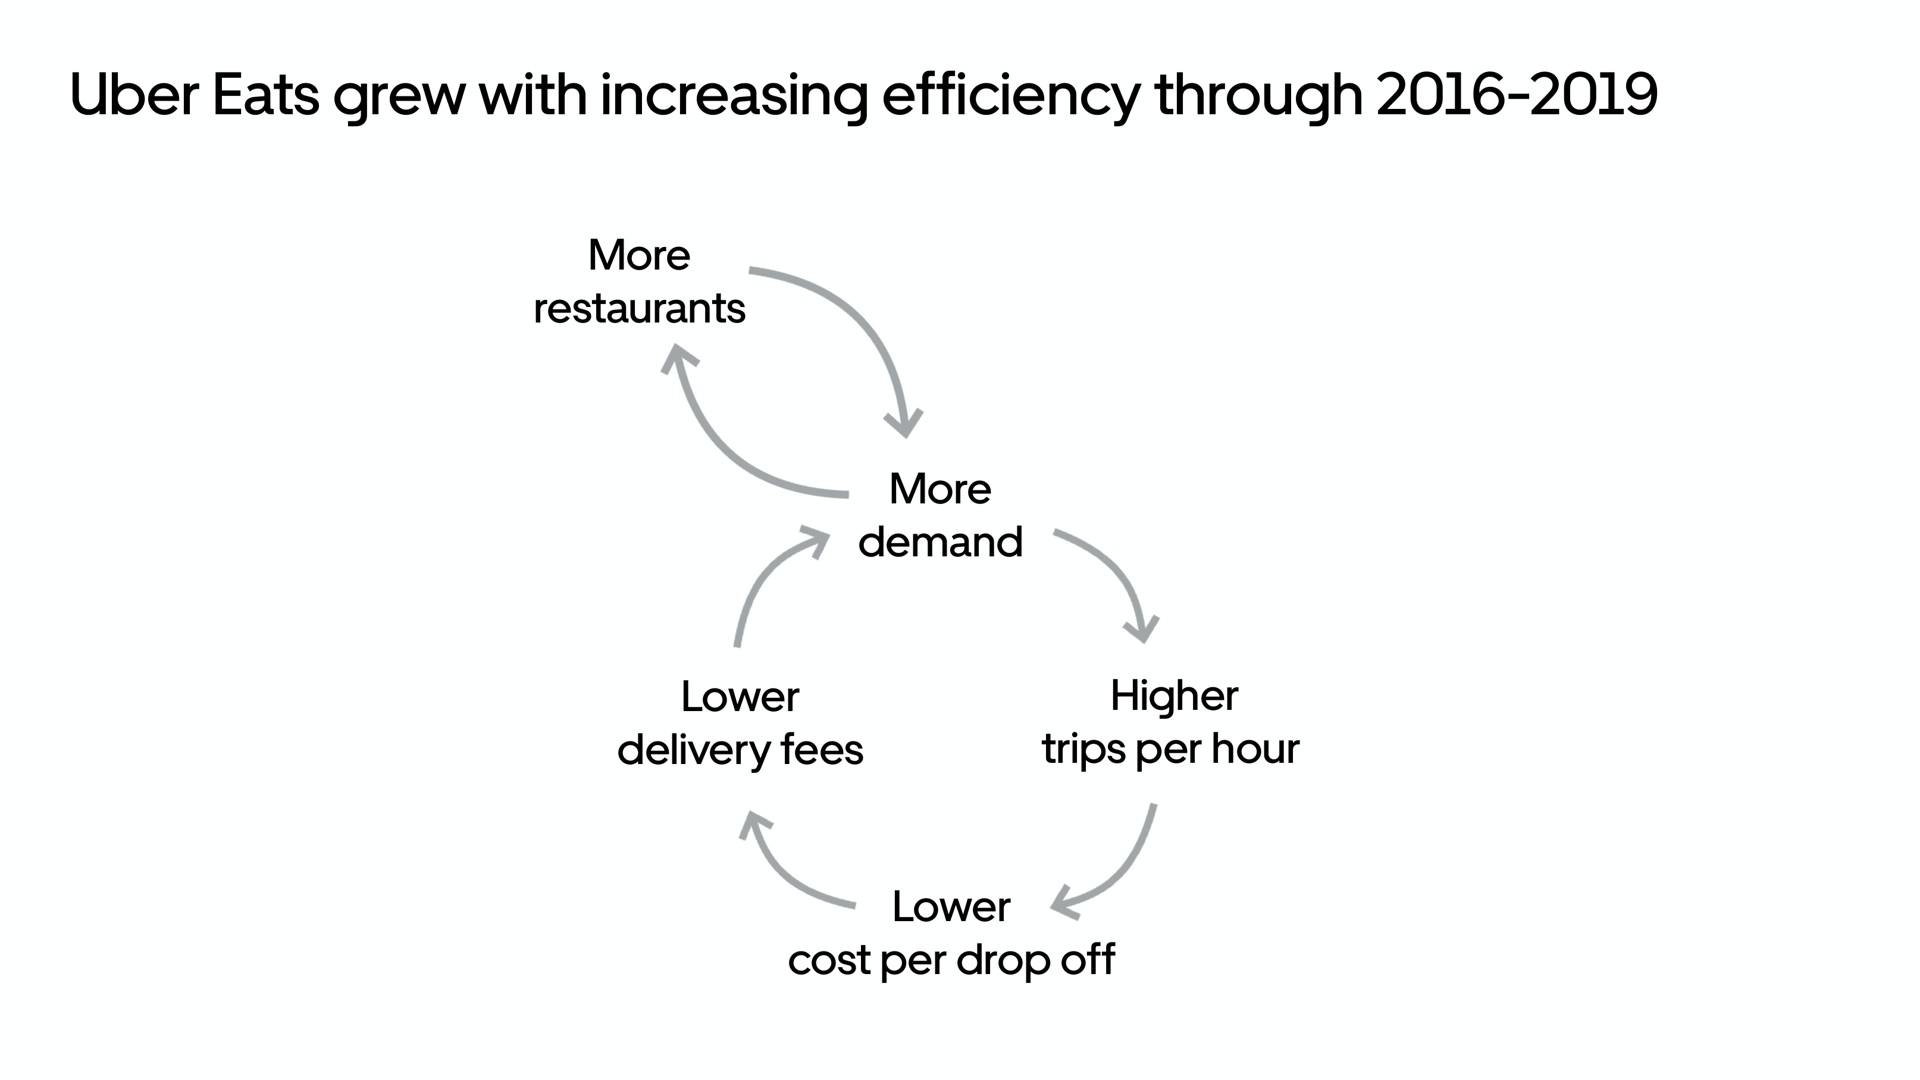 eats grew with increasing efficiency through | Uber